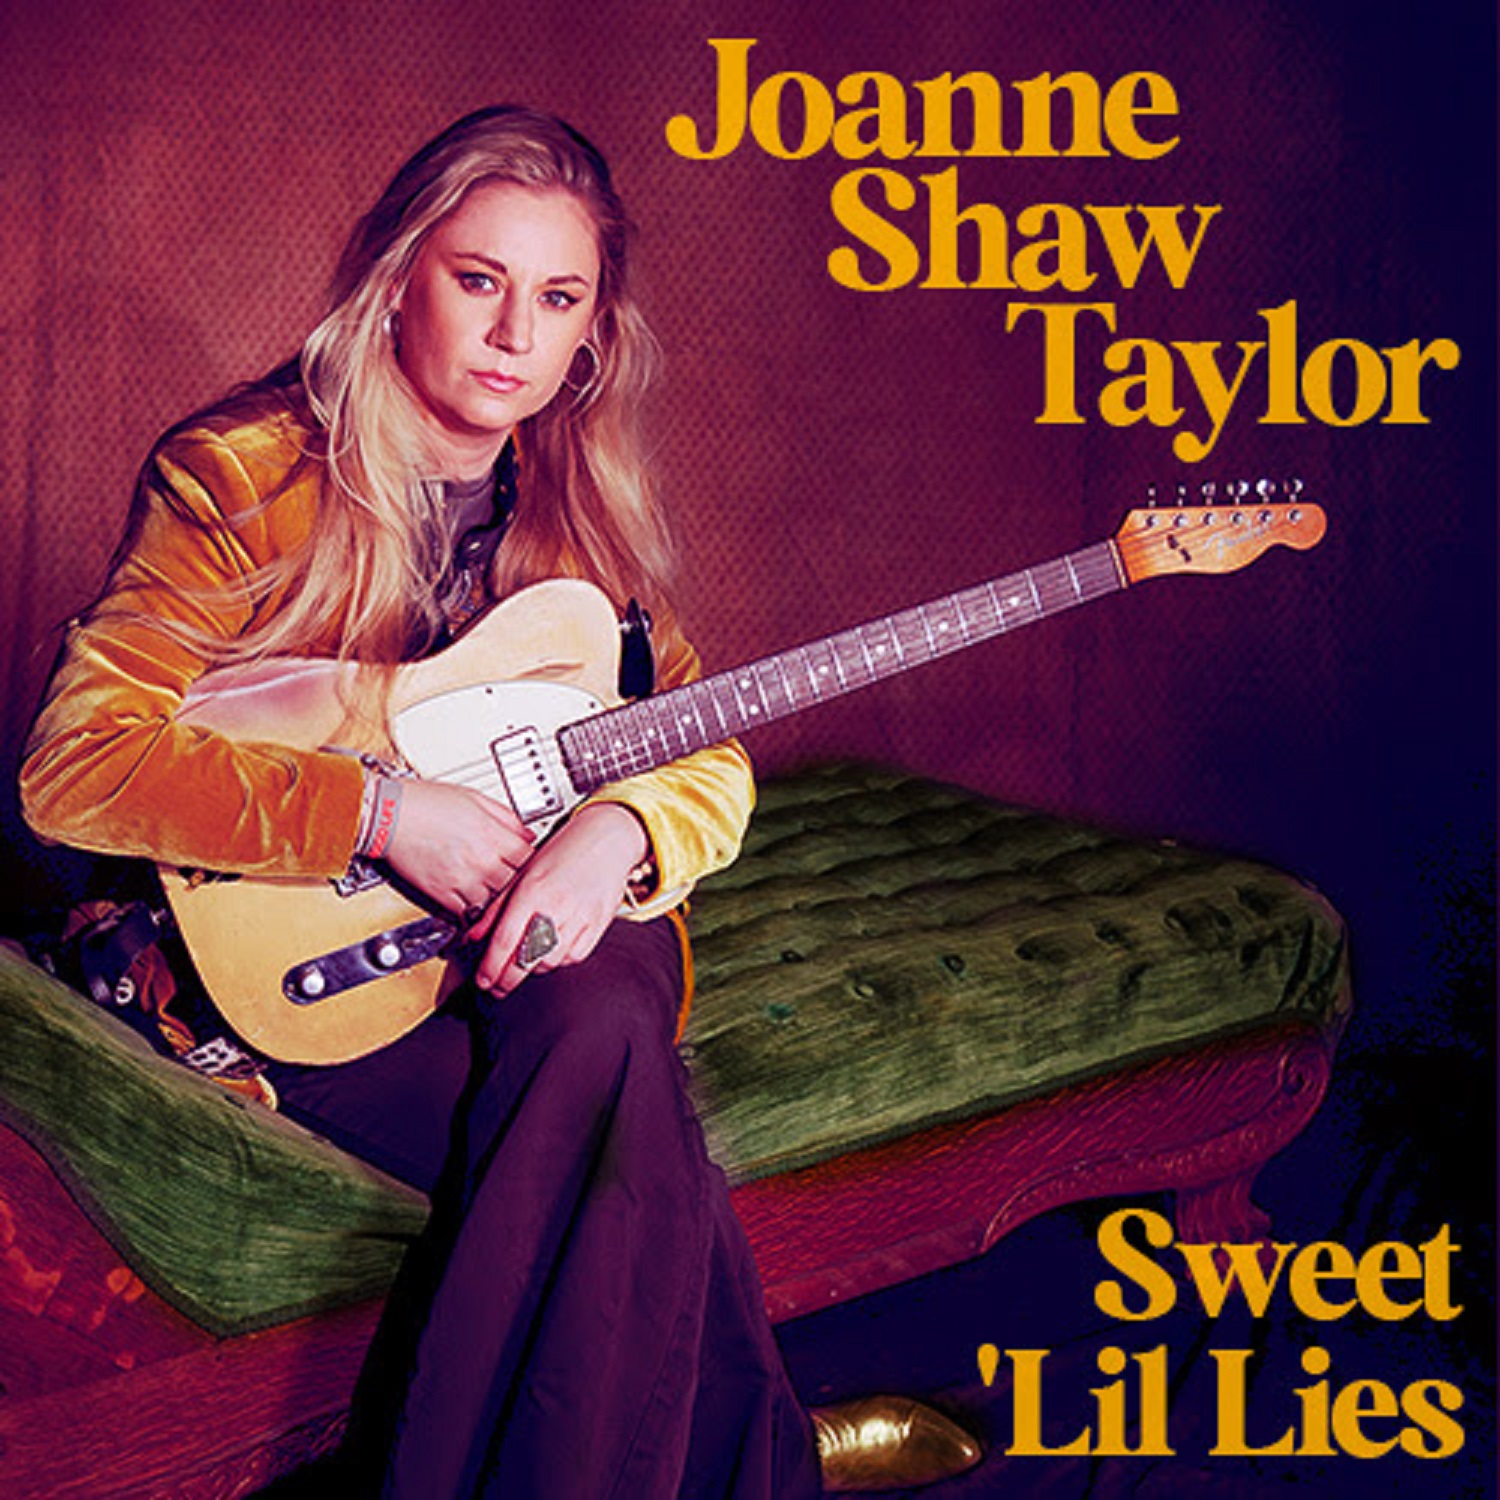 Joanne Shaw Taylor Blends Fleetwood Mac, Bonnie Raitt On Long Awaited New Single